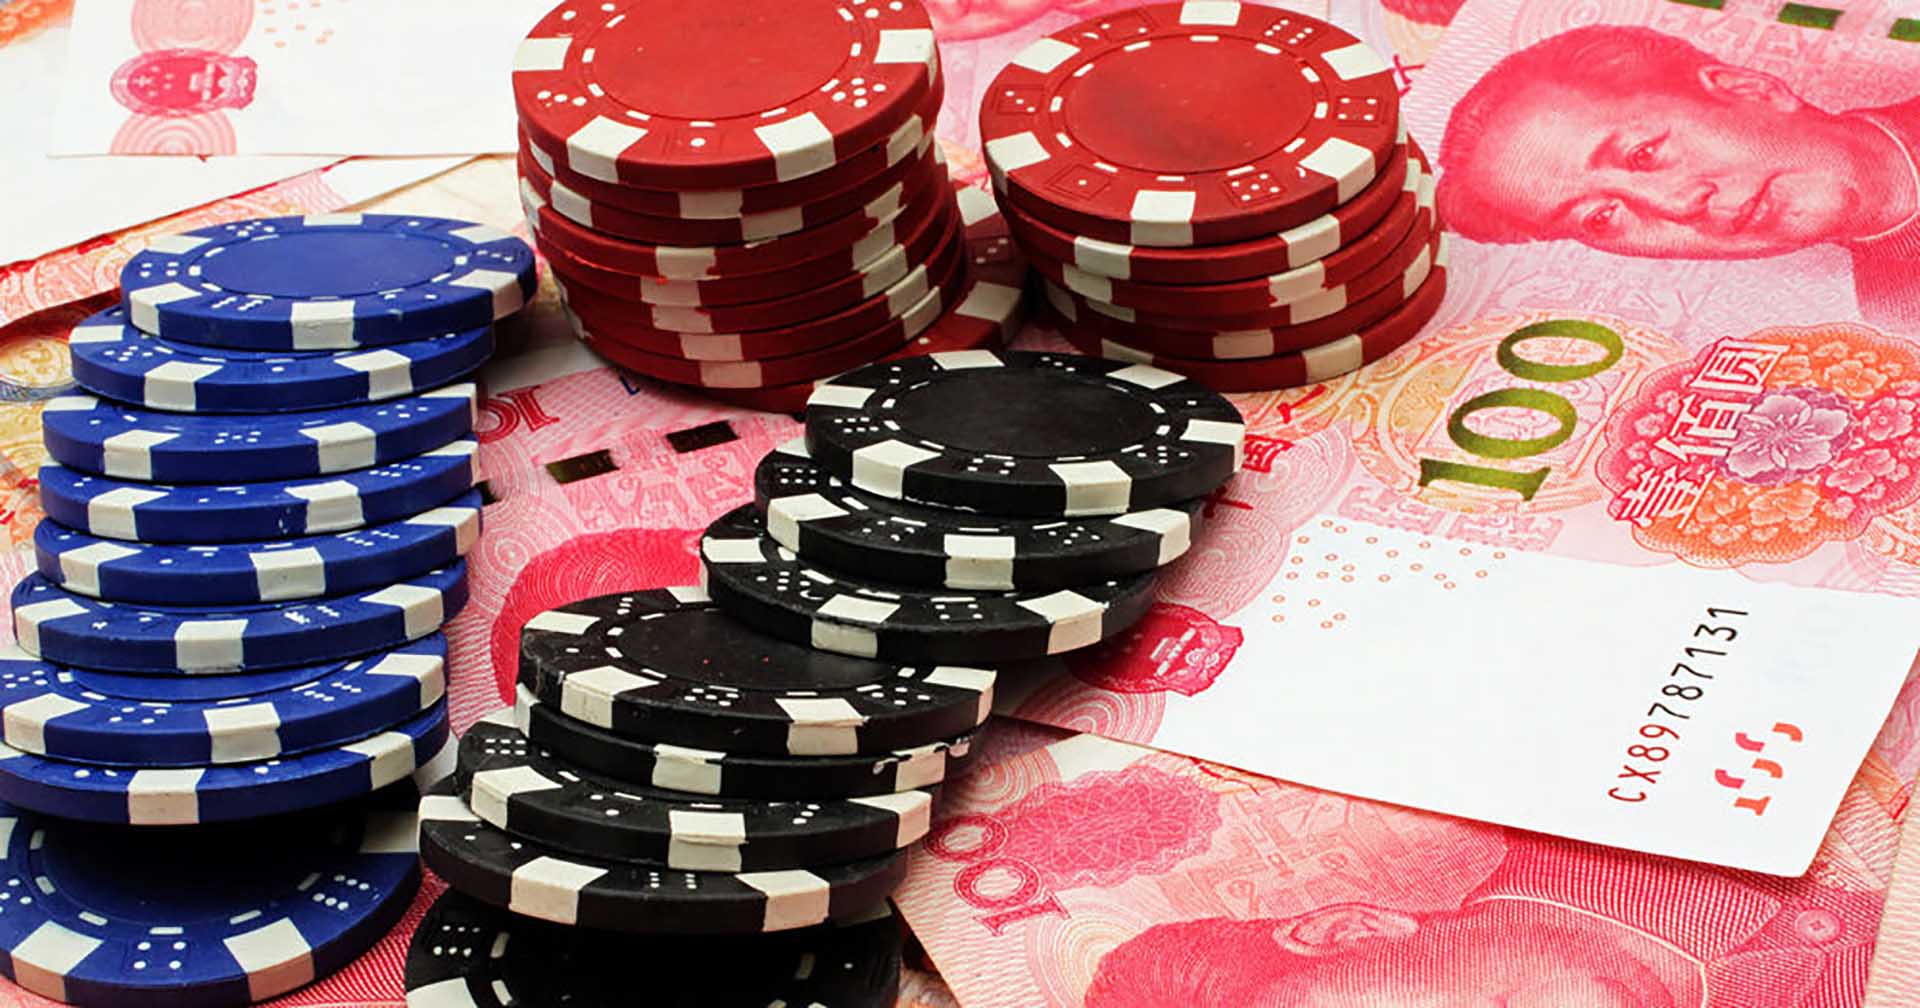 Ex-Macau Gangster’s ICO Raises $750 Million in Under Five Minutes